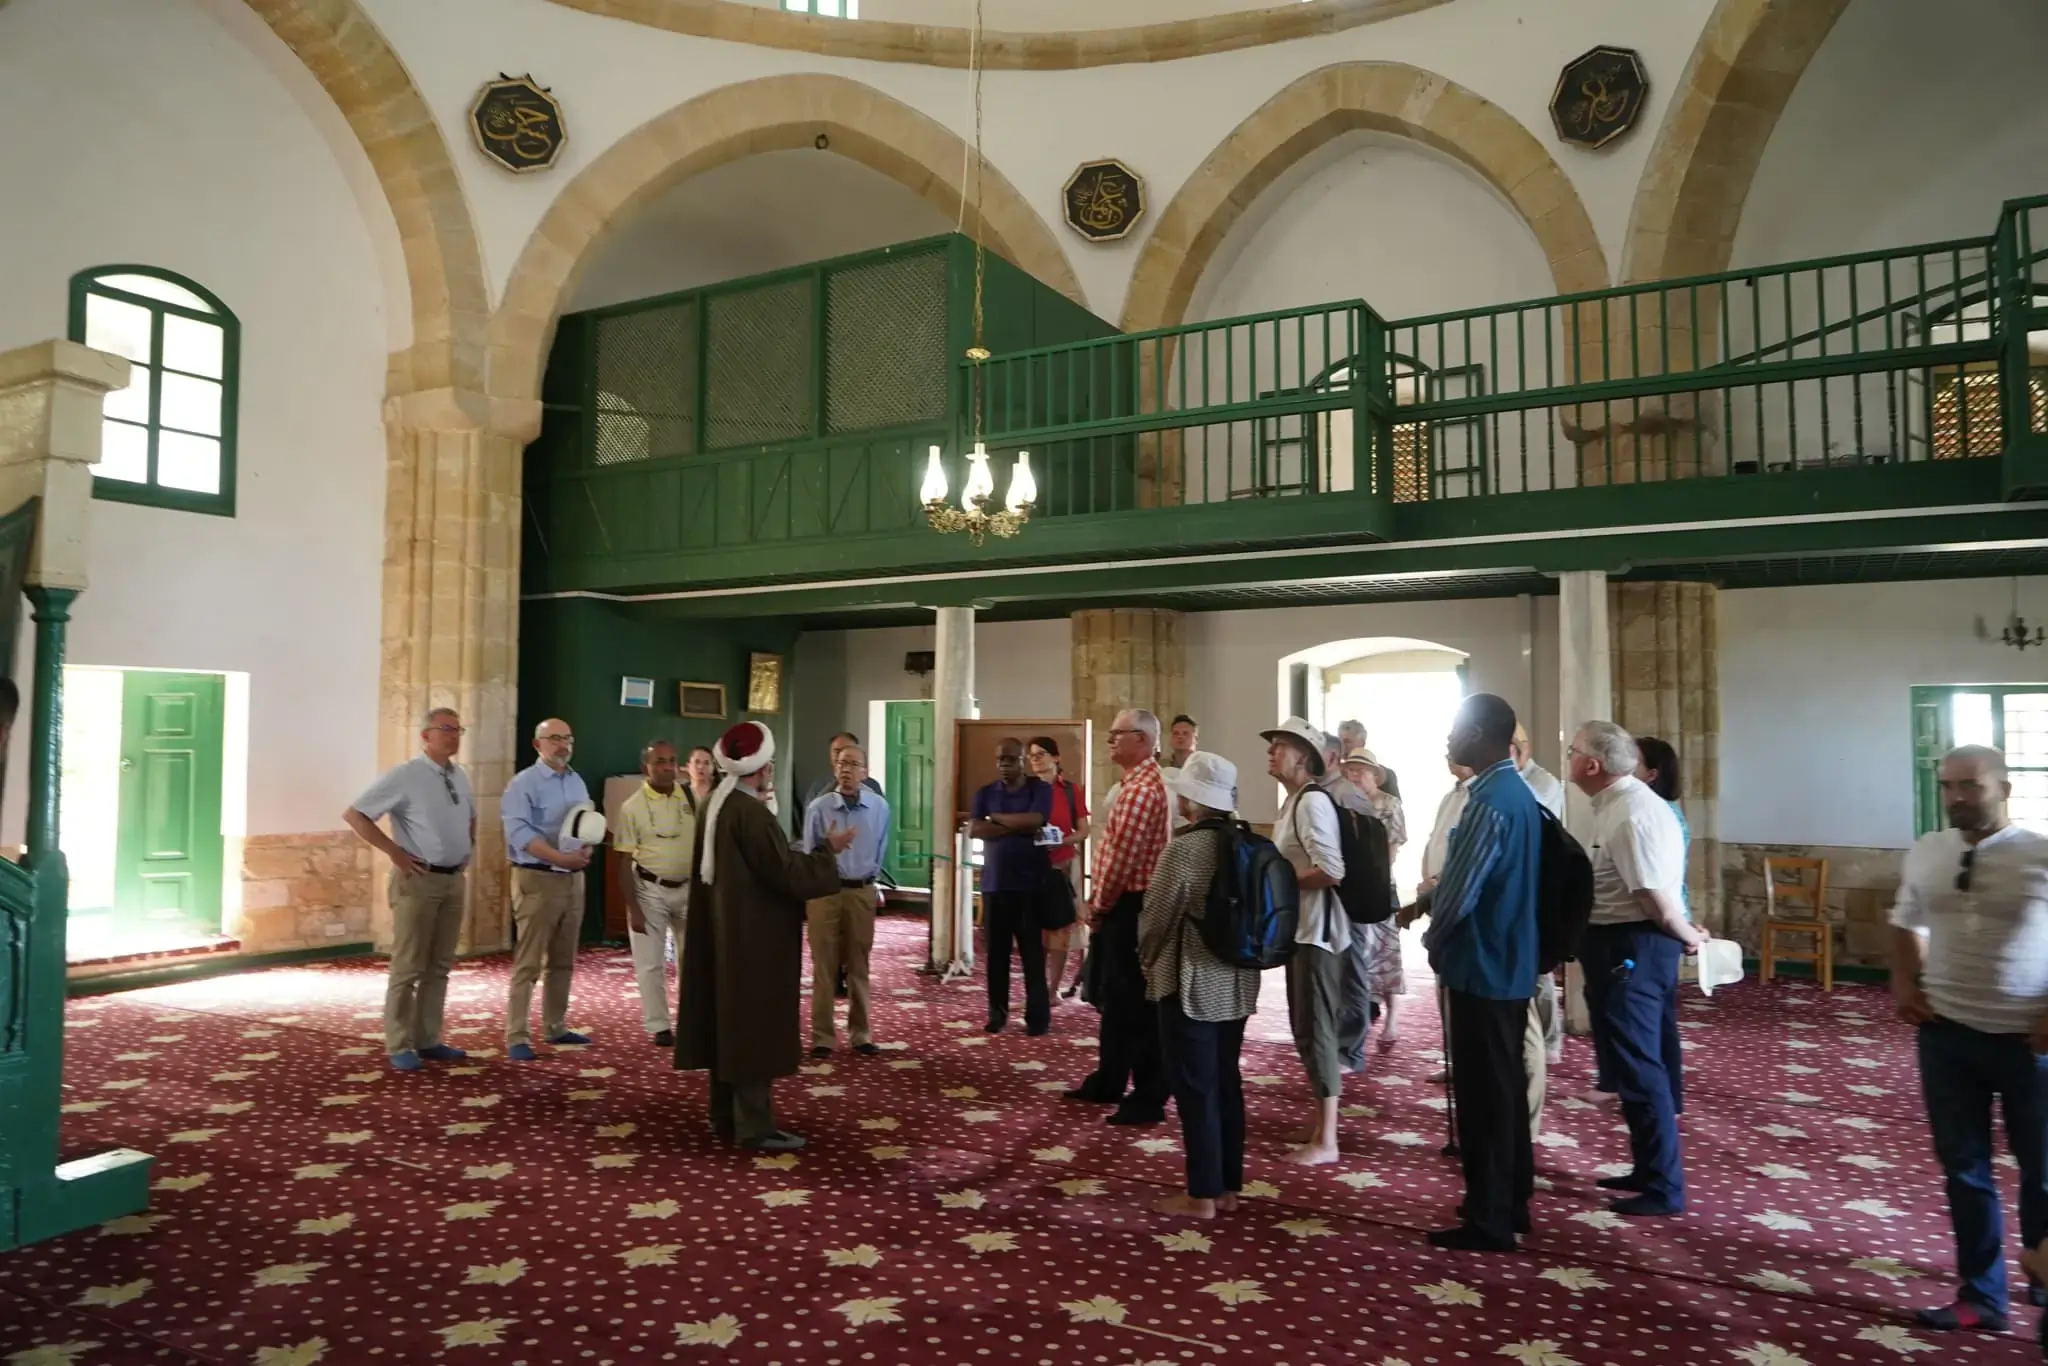 ARCIC III members were welcomed during a visit to the Hala Sultan Tekke Mosque in Larnaca, Cyprus